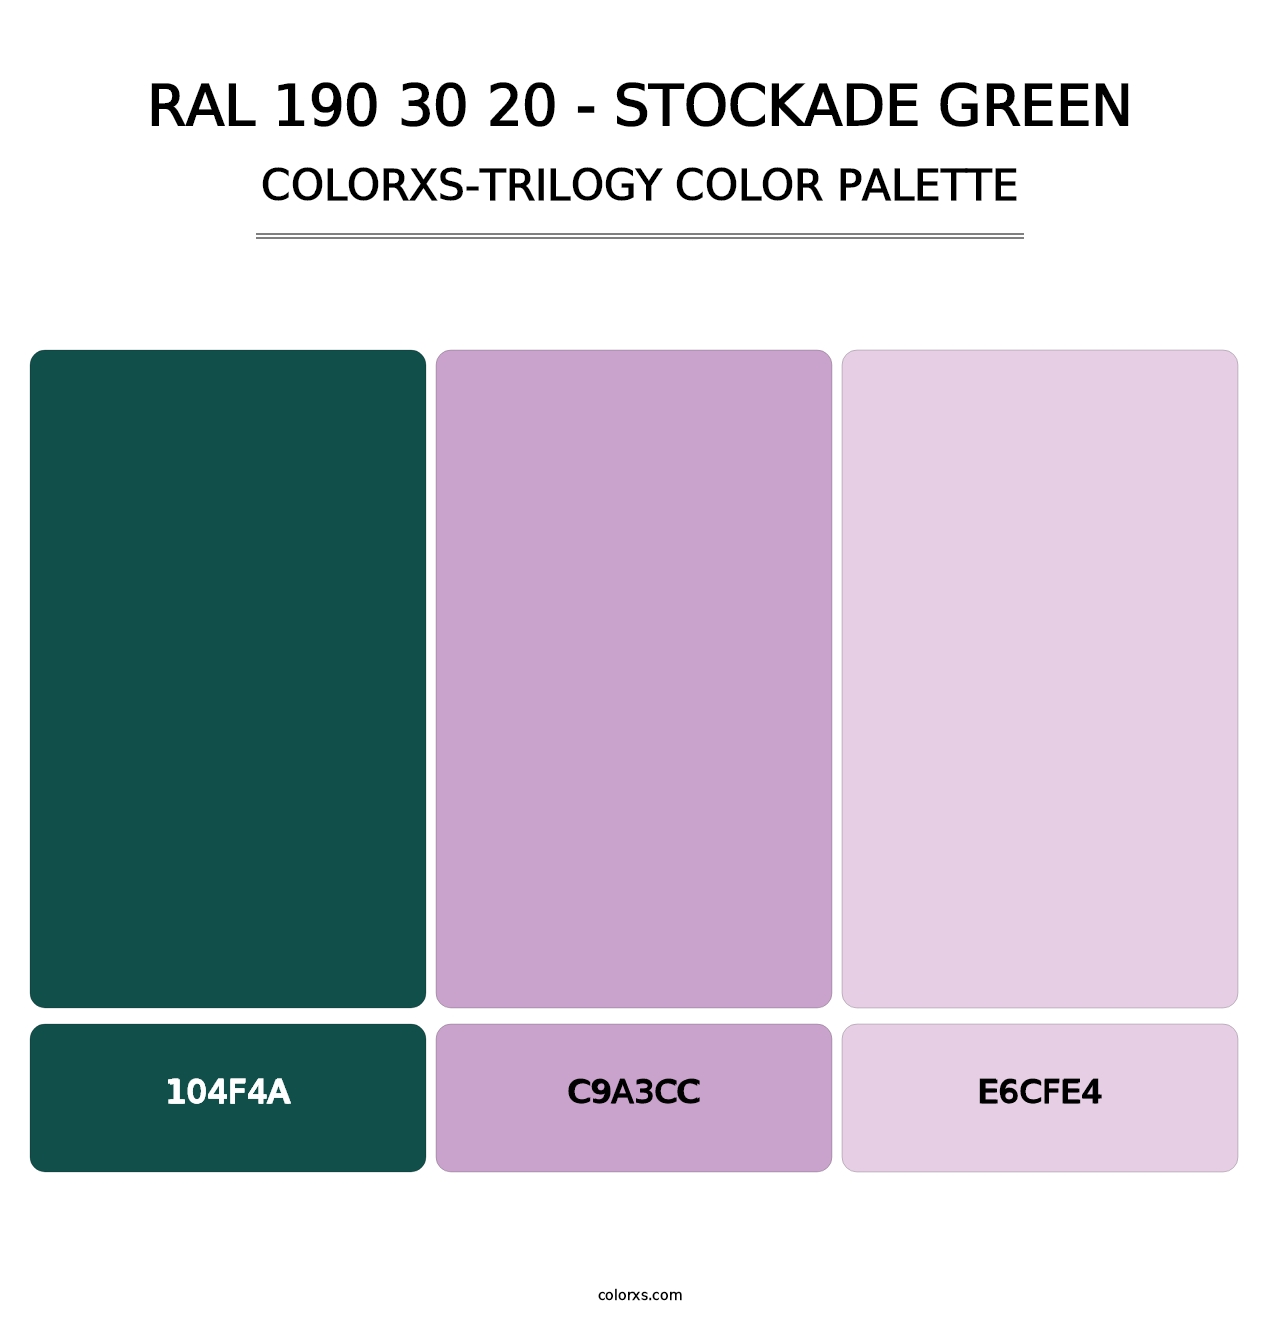 RAL 190 30 20 - Stockade Green - Colorxs Trilogy Palette